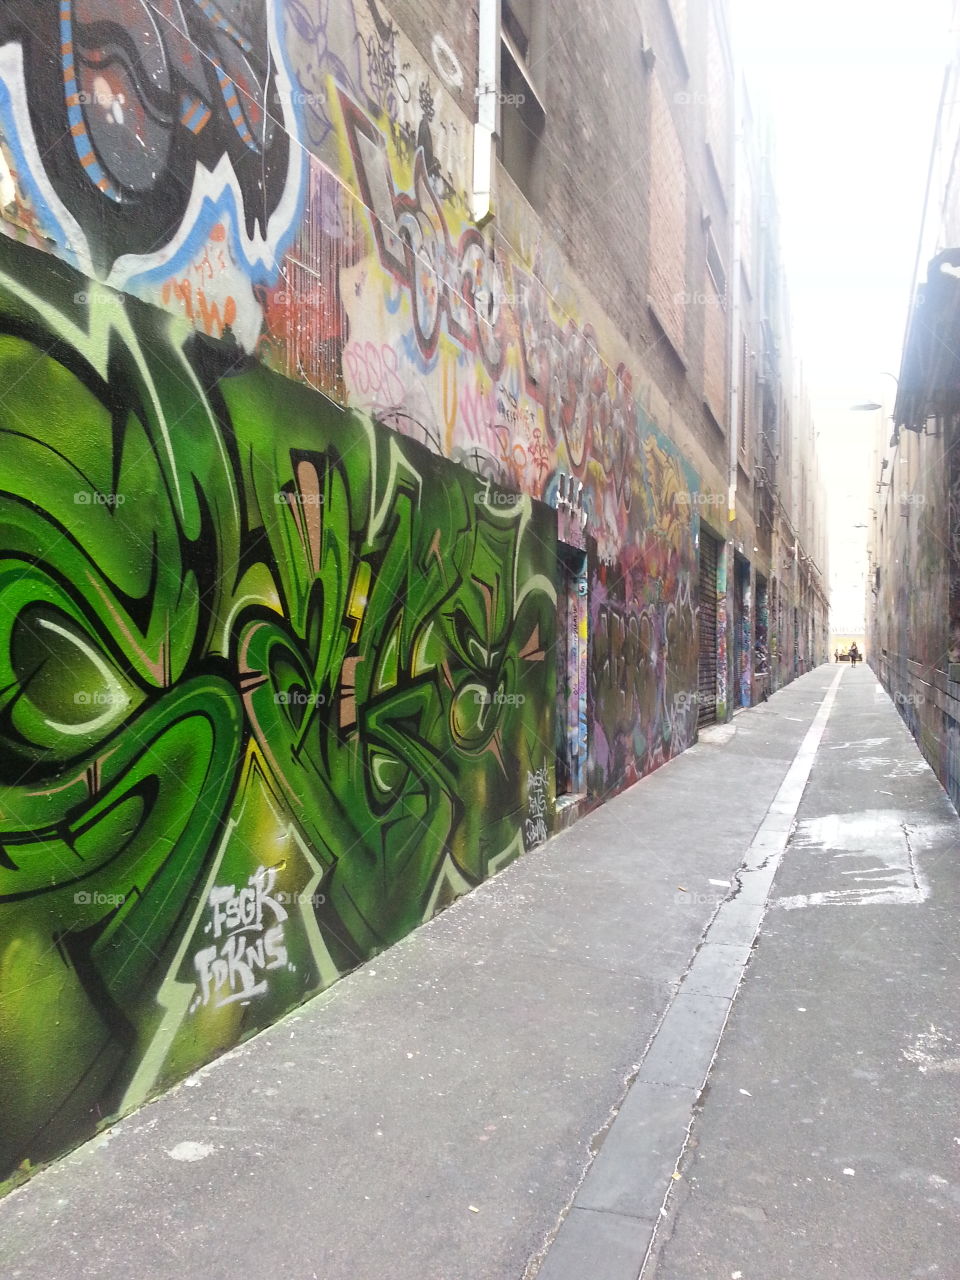 Graffiti art in Melbourne, Australia.